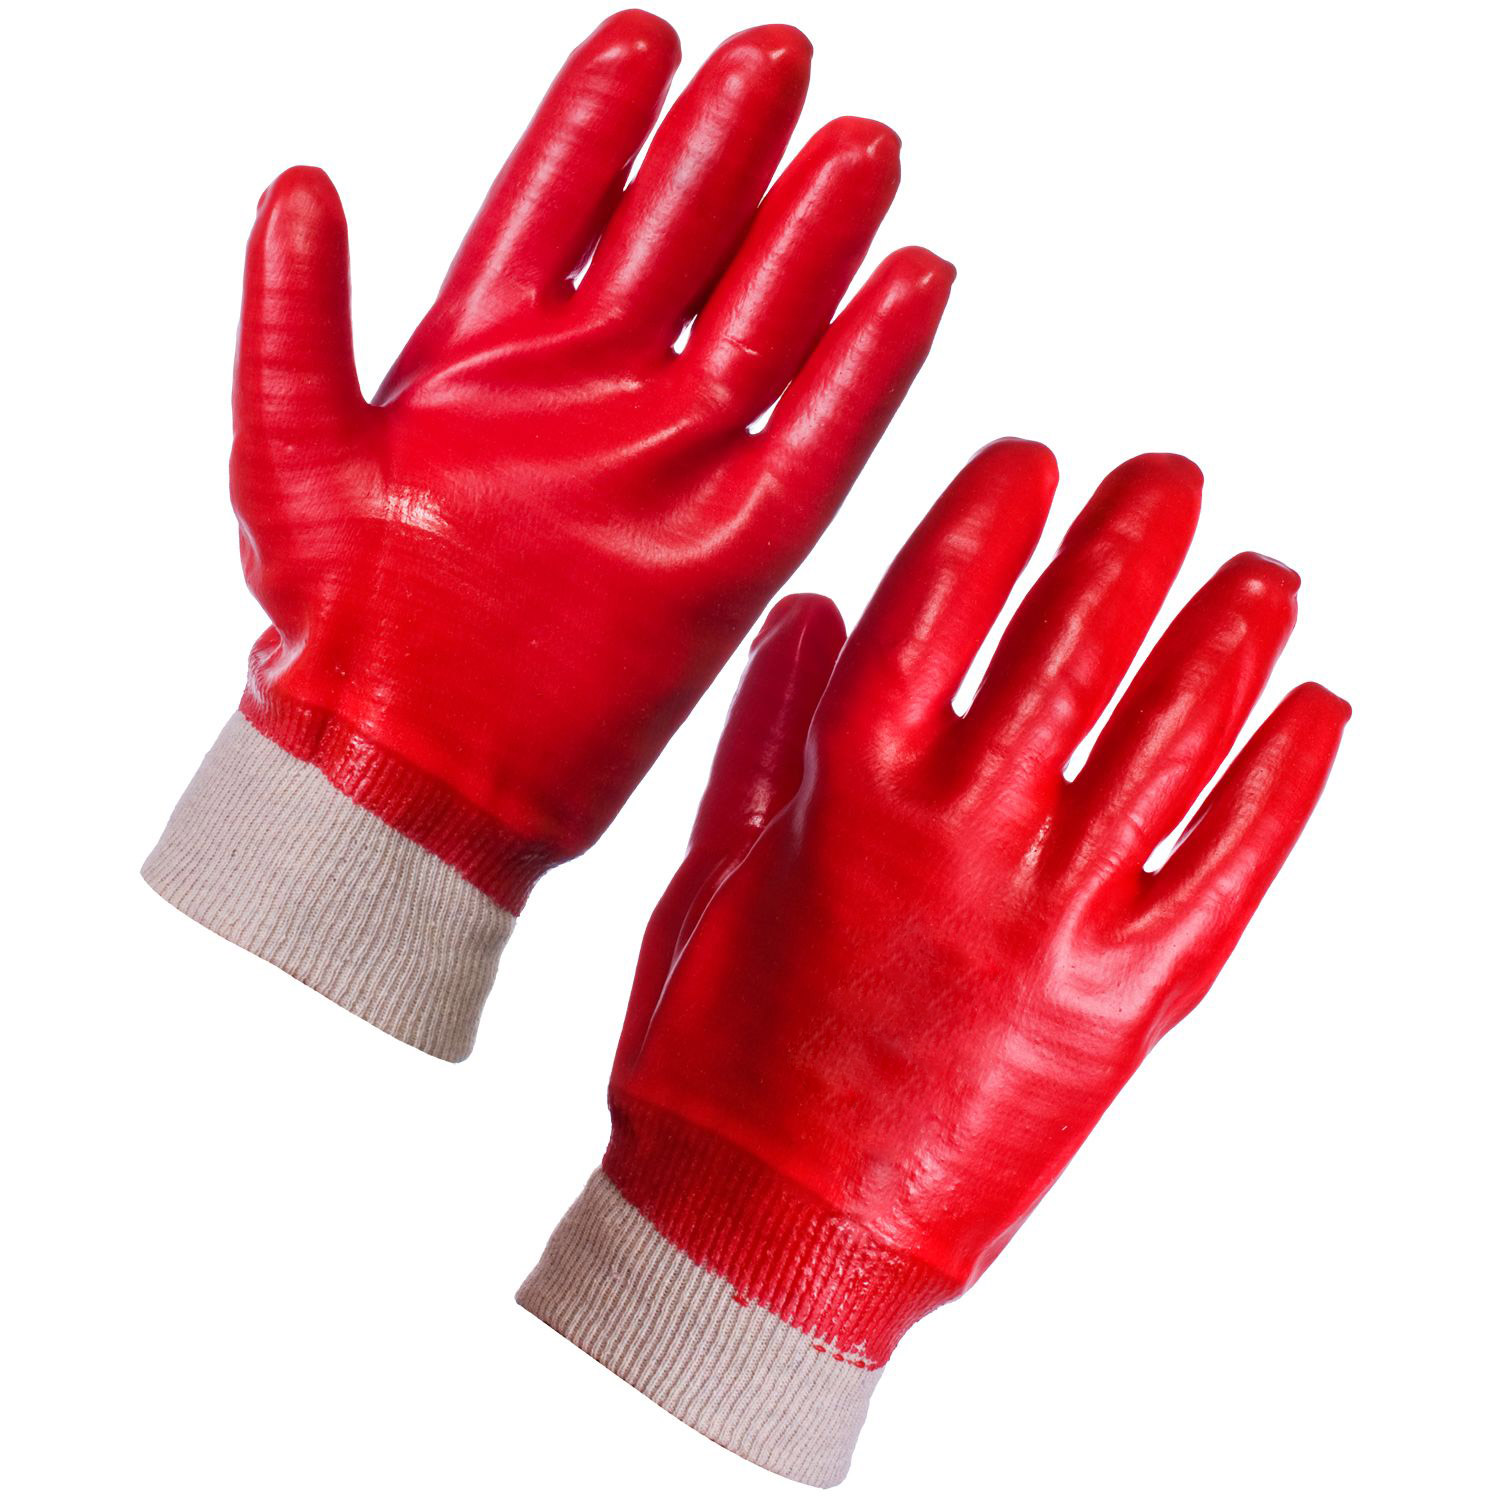 PVC Full Dip Industrial Knit Wrist Gloves